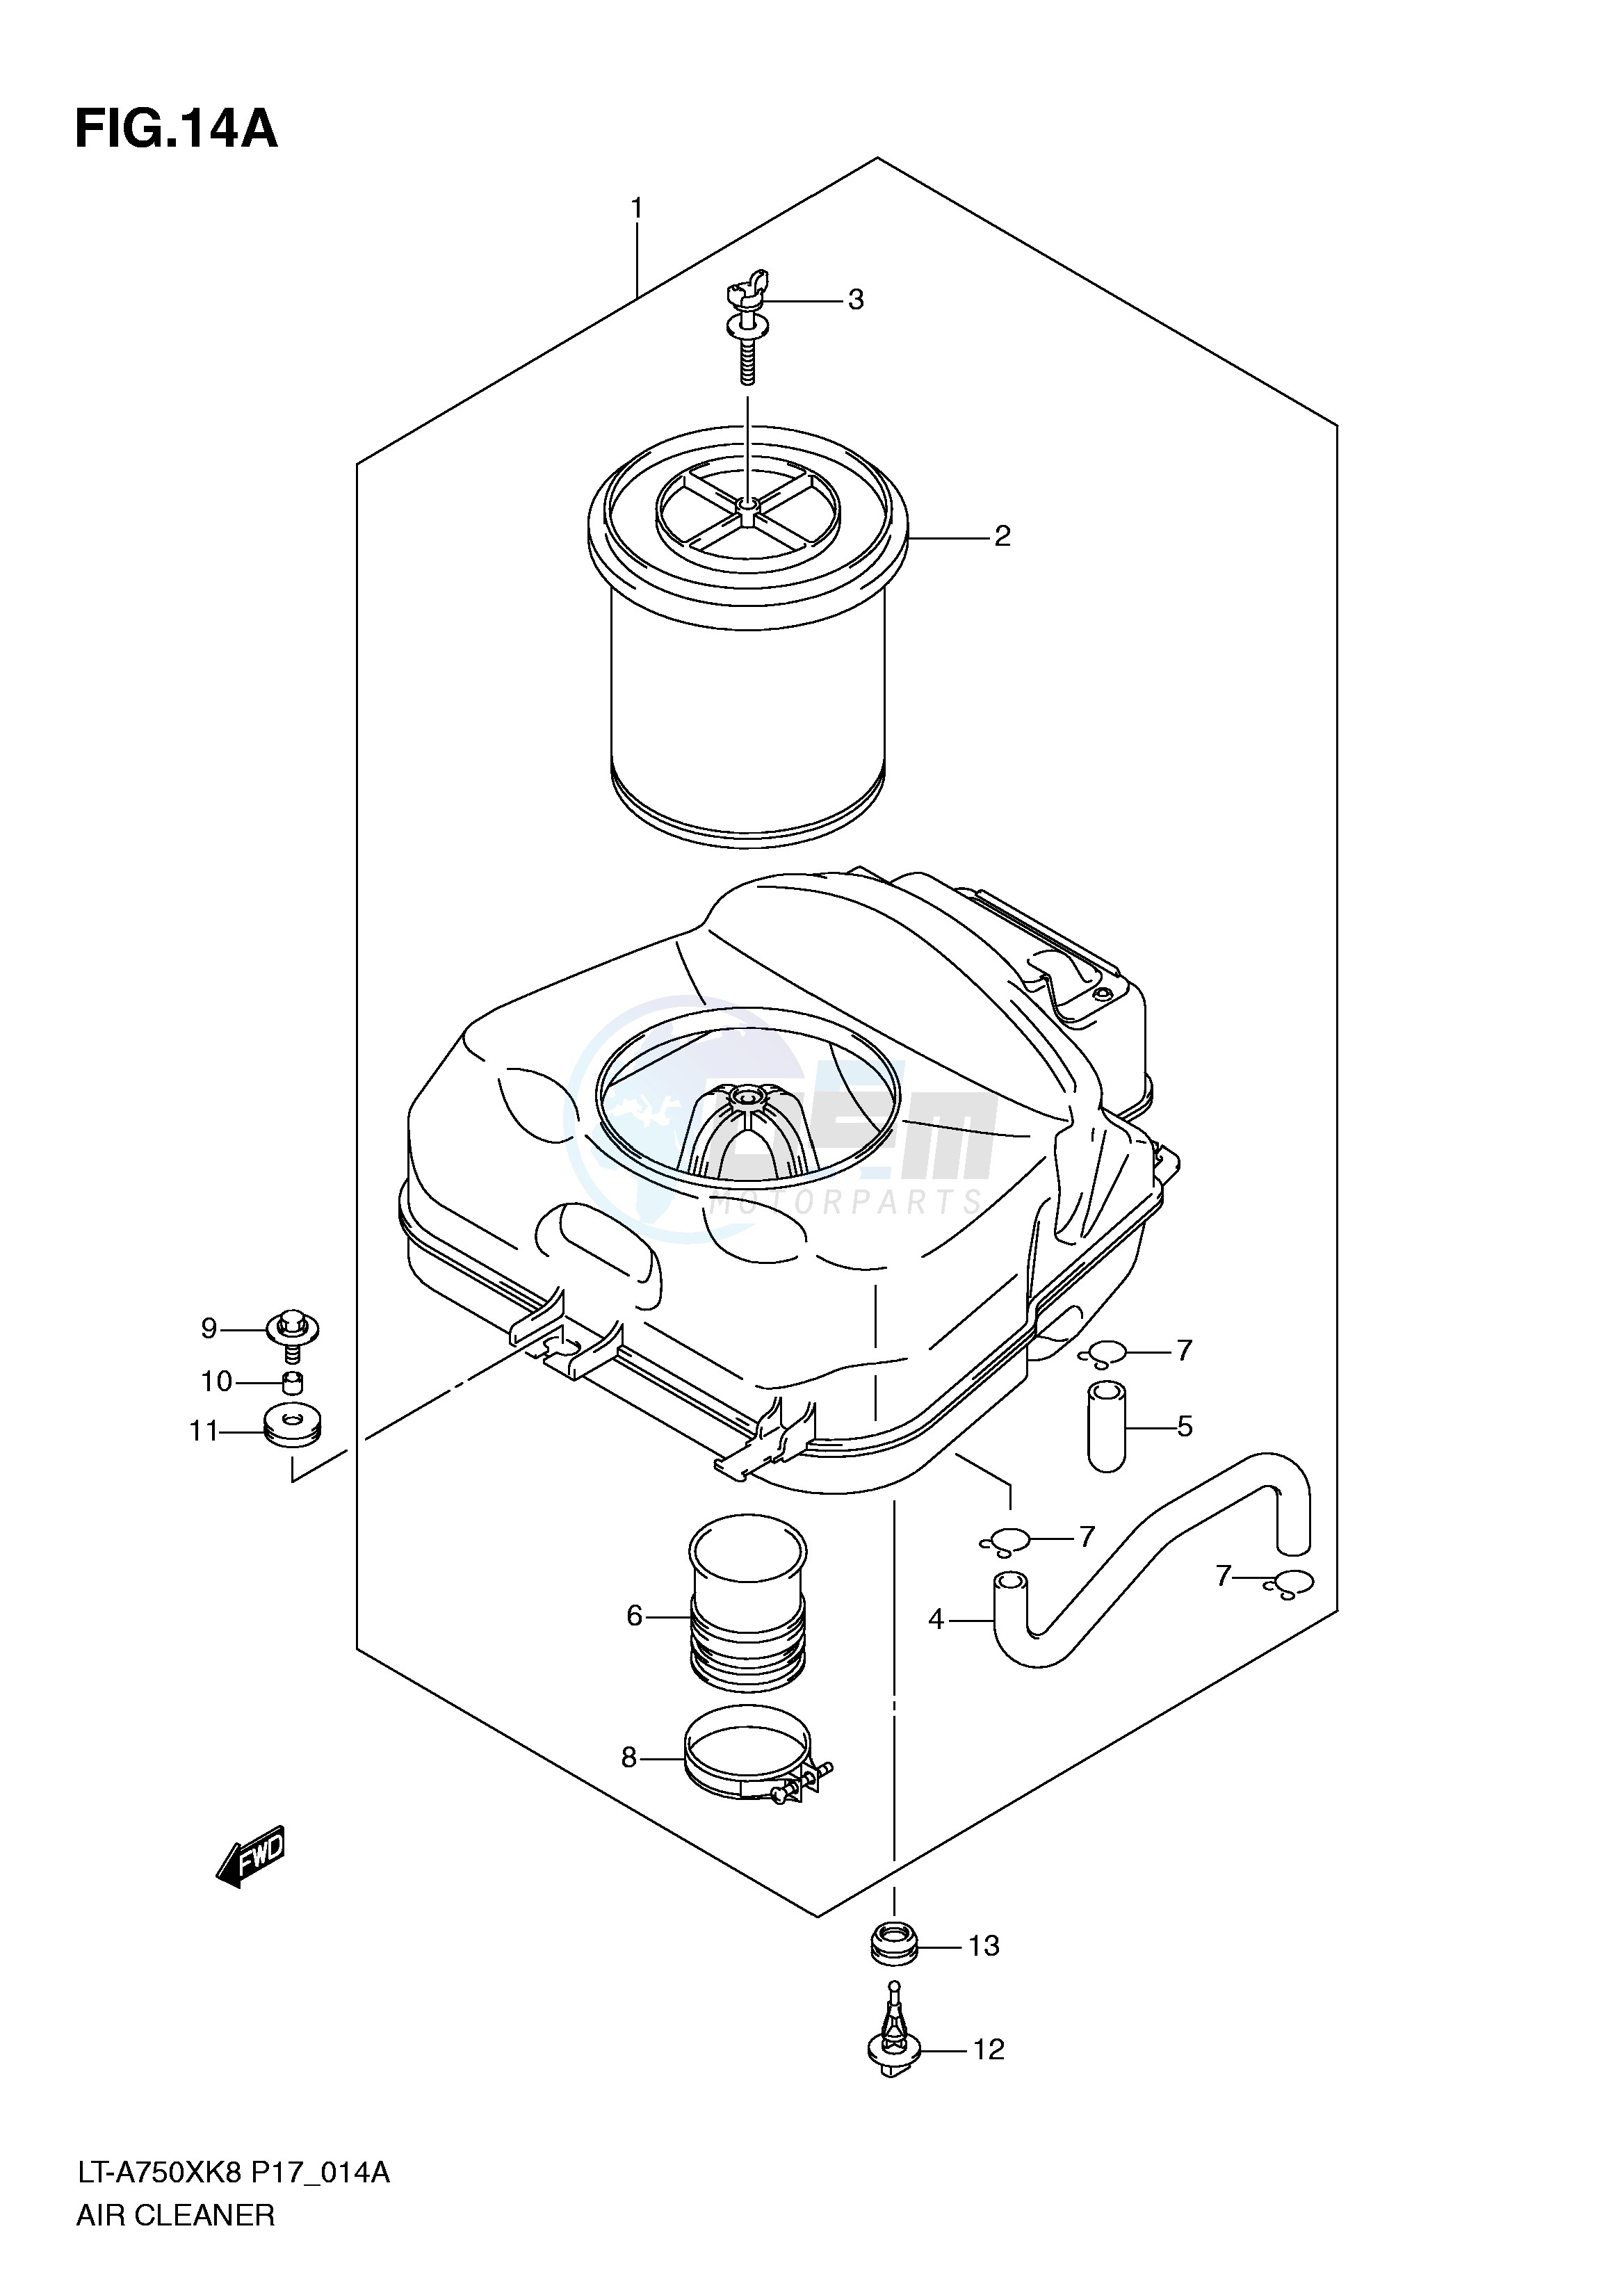 AIR CLEANER (LT-A750XL0) blueprint